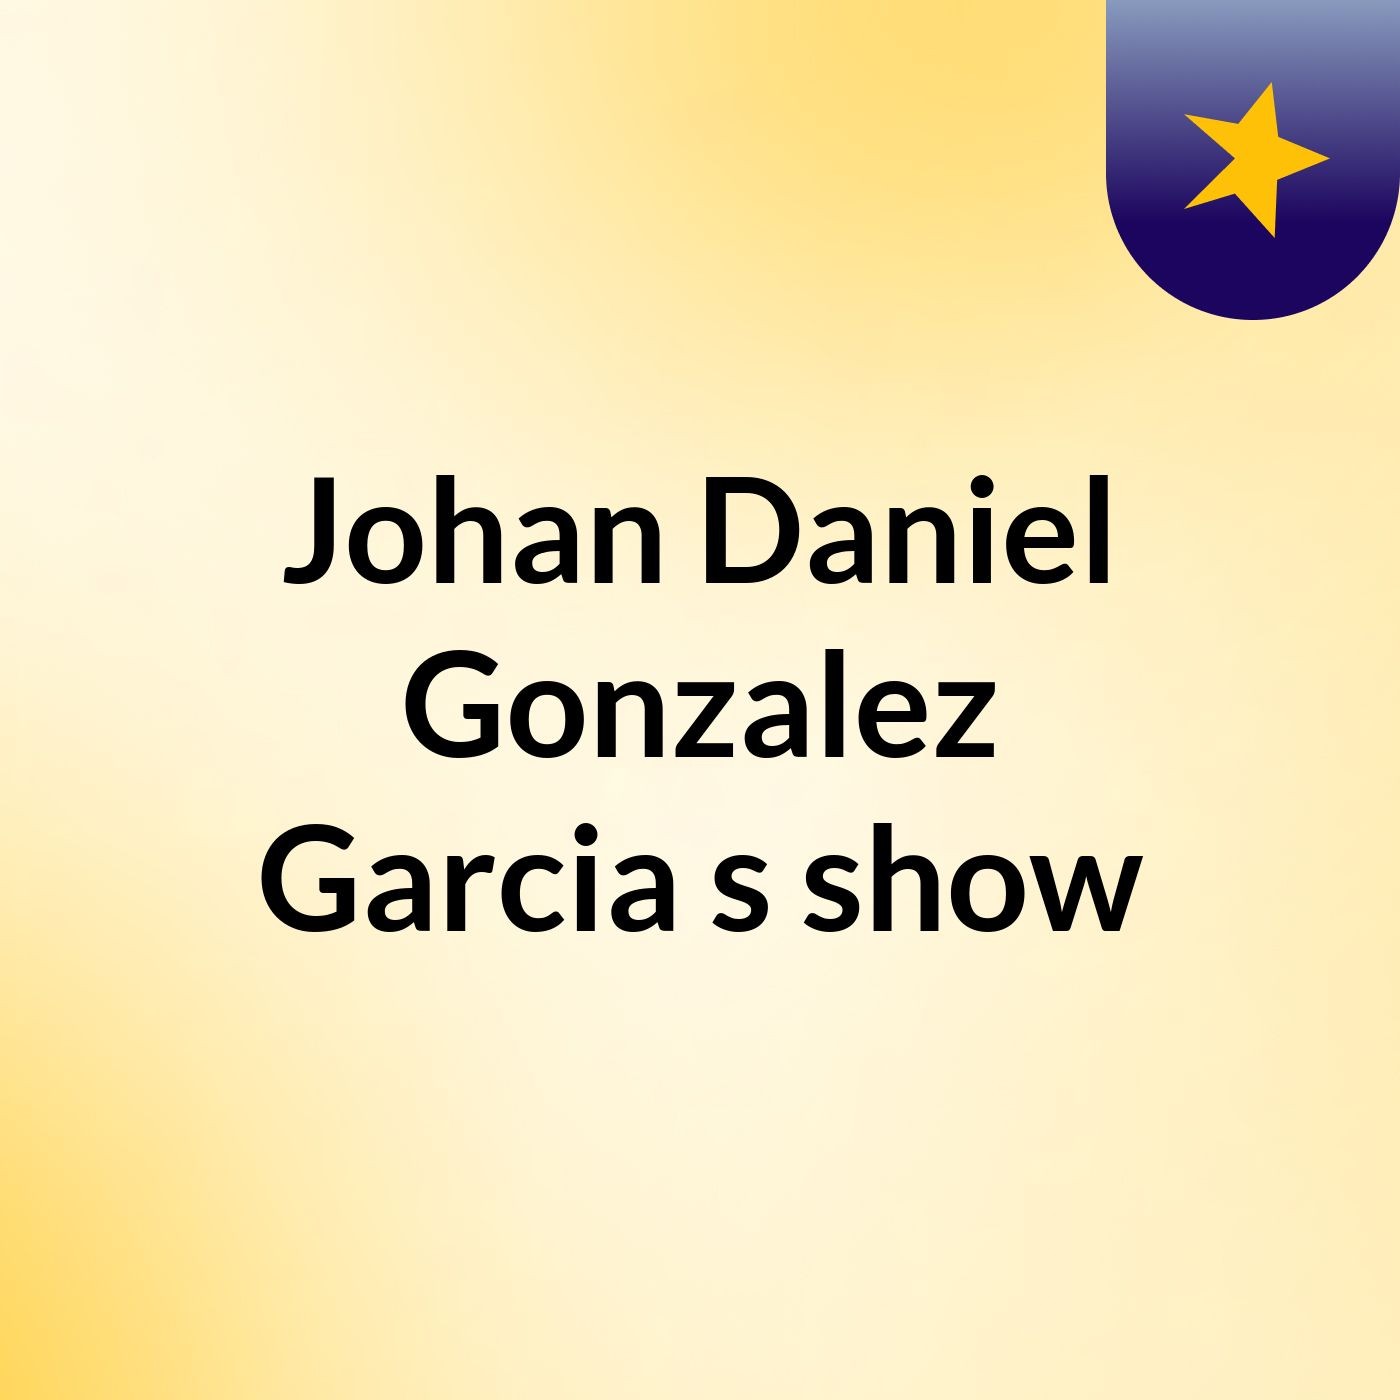 Johan Daniel Gonzalez Garcia's show